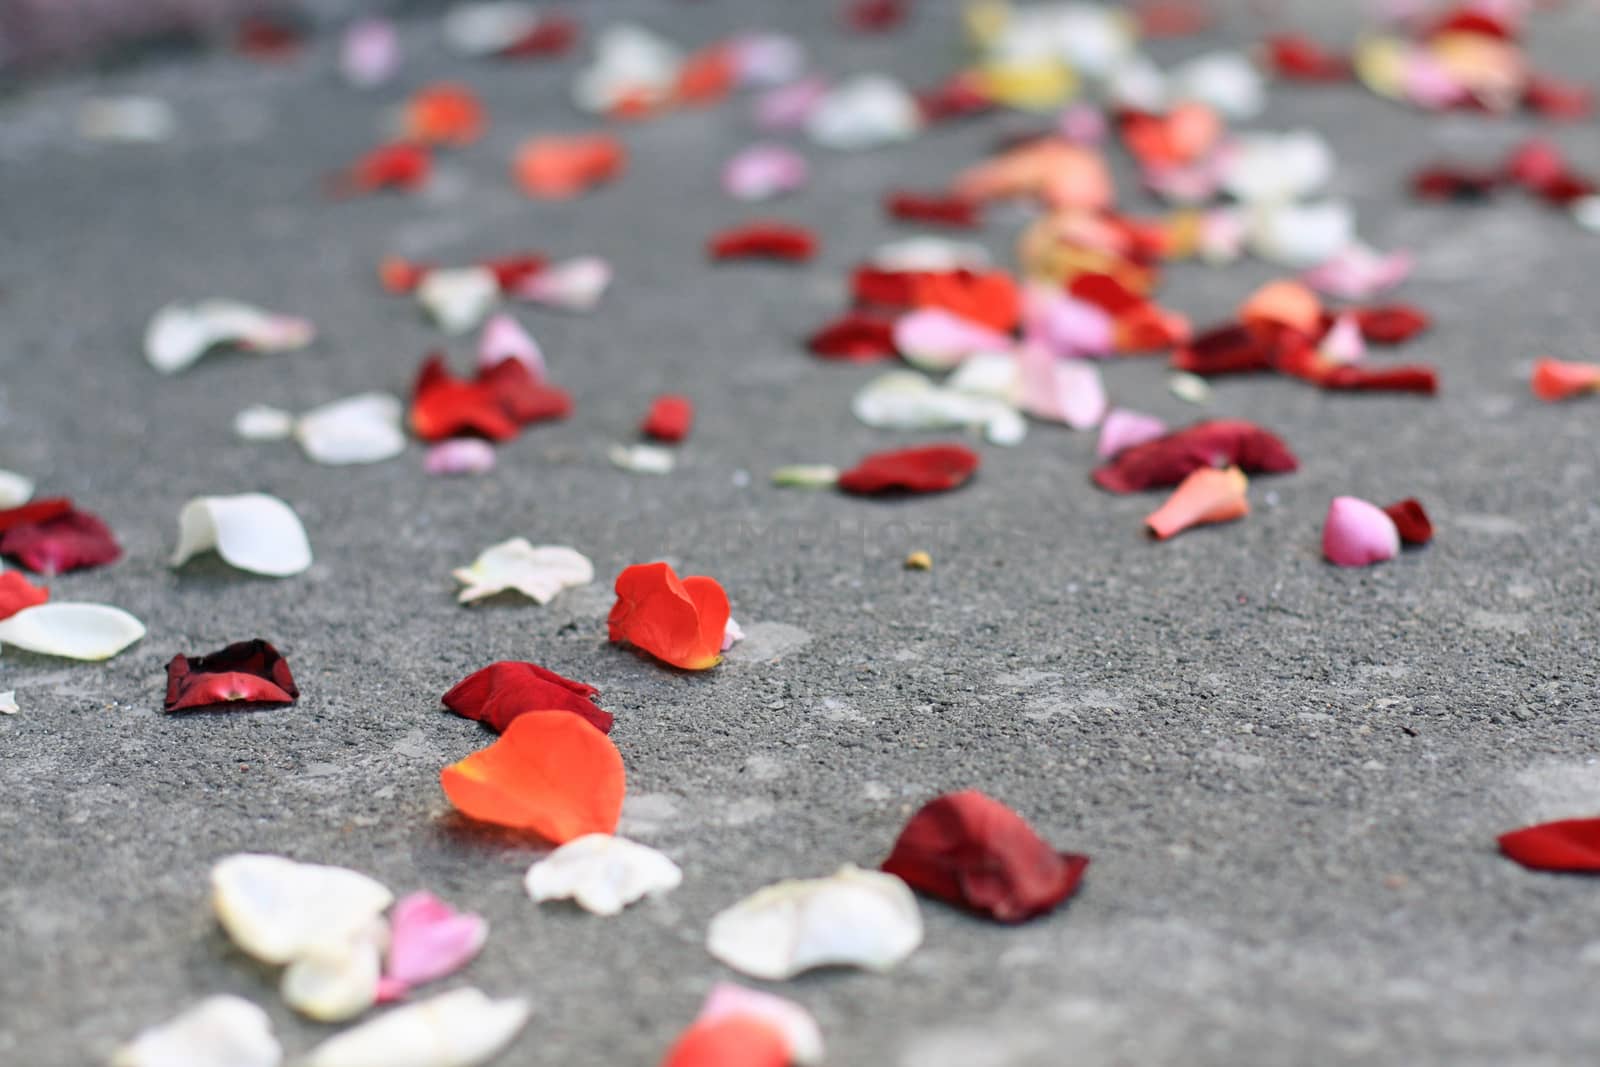 Rose petals by Lessadar